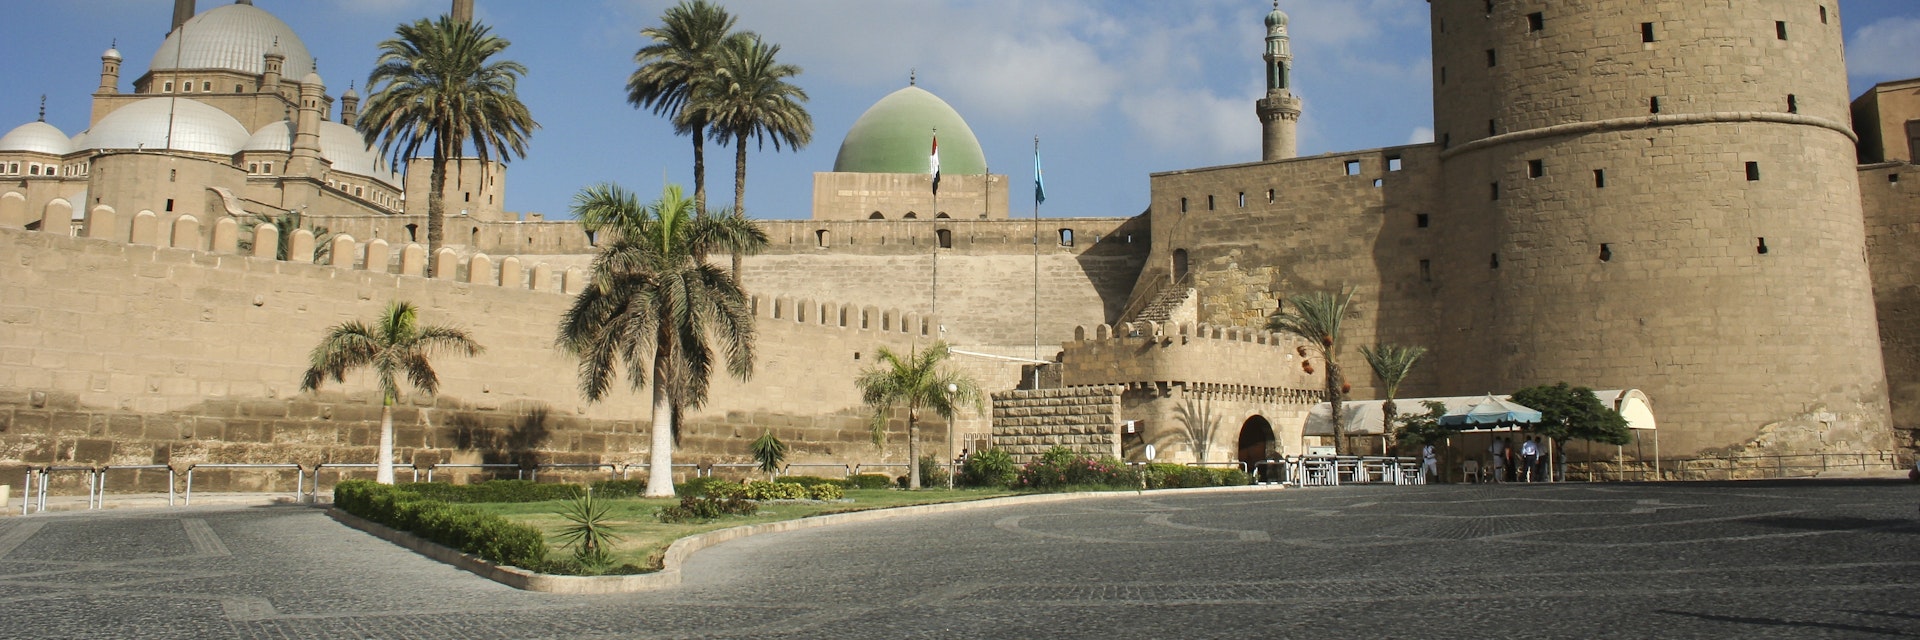 Citadel, Cairo, Egypt